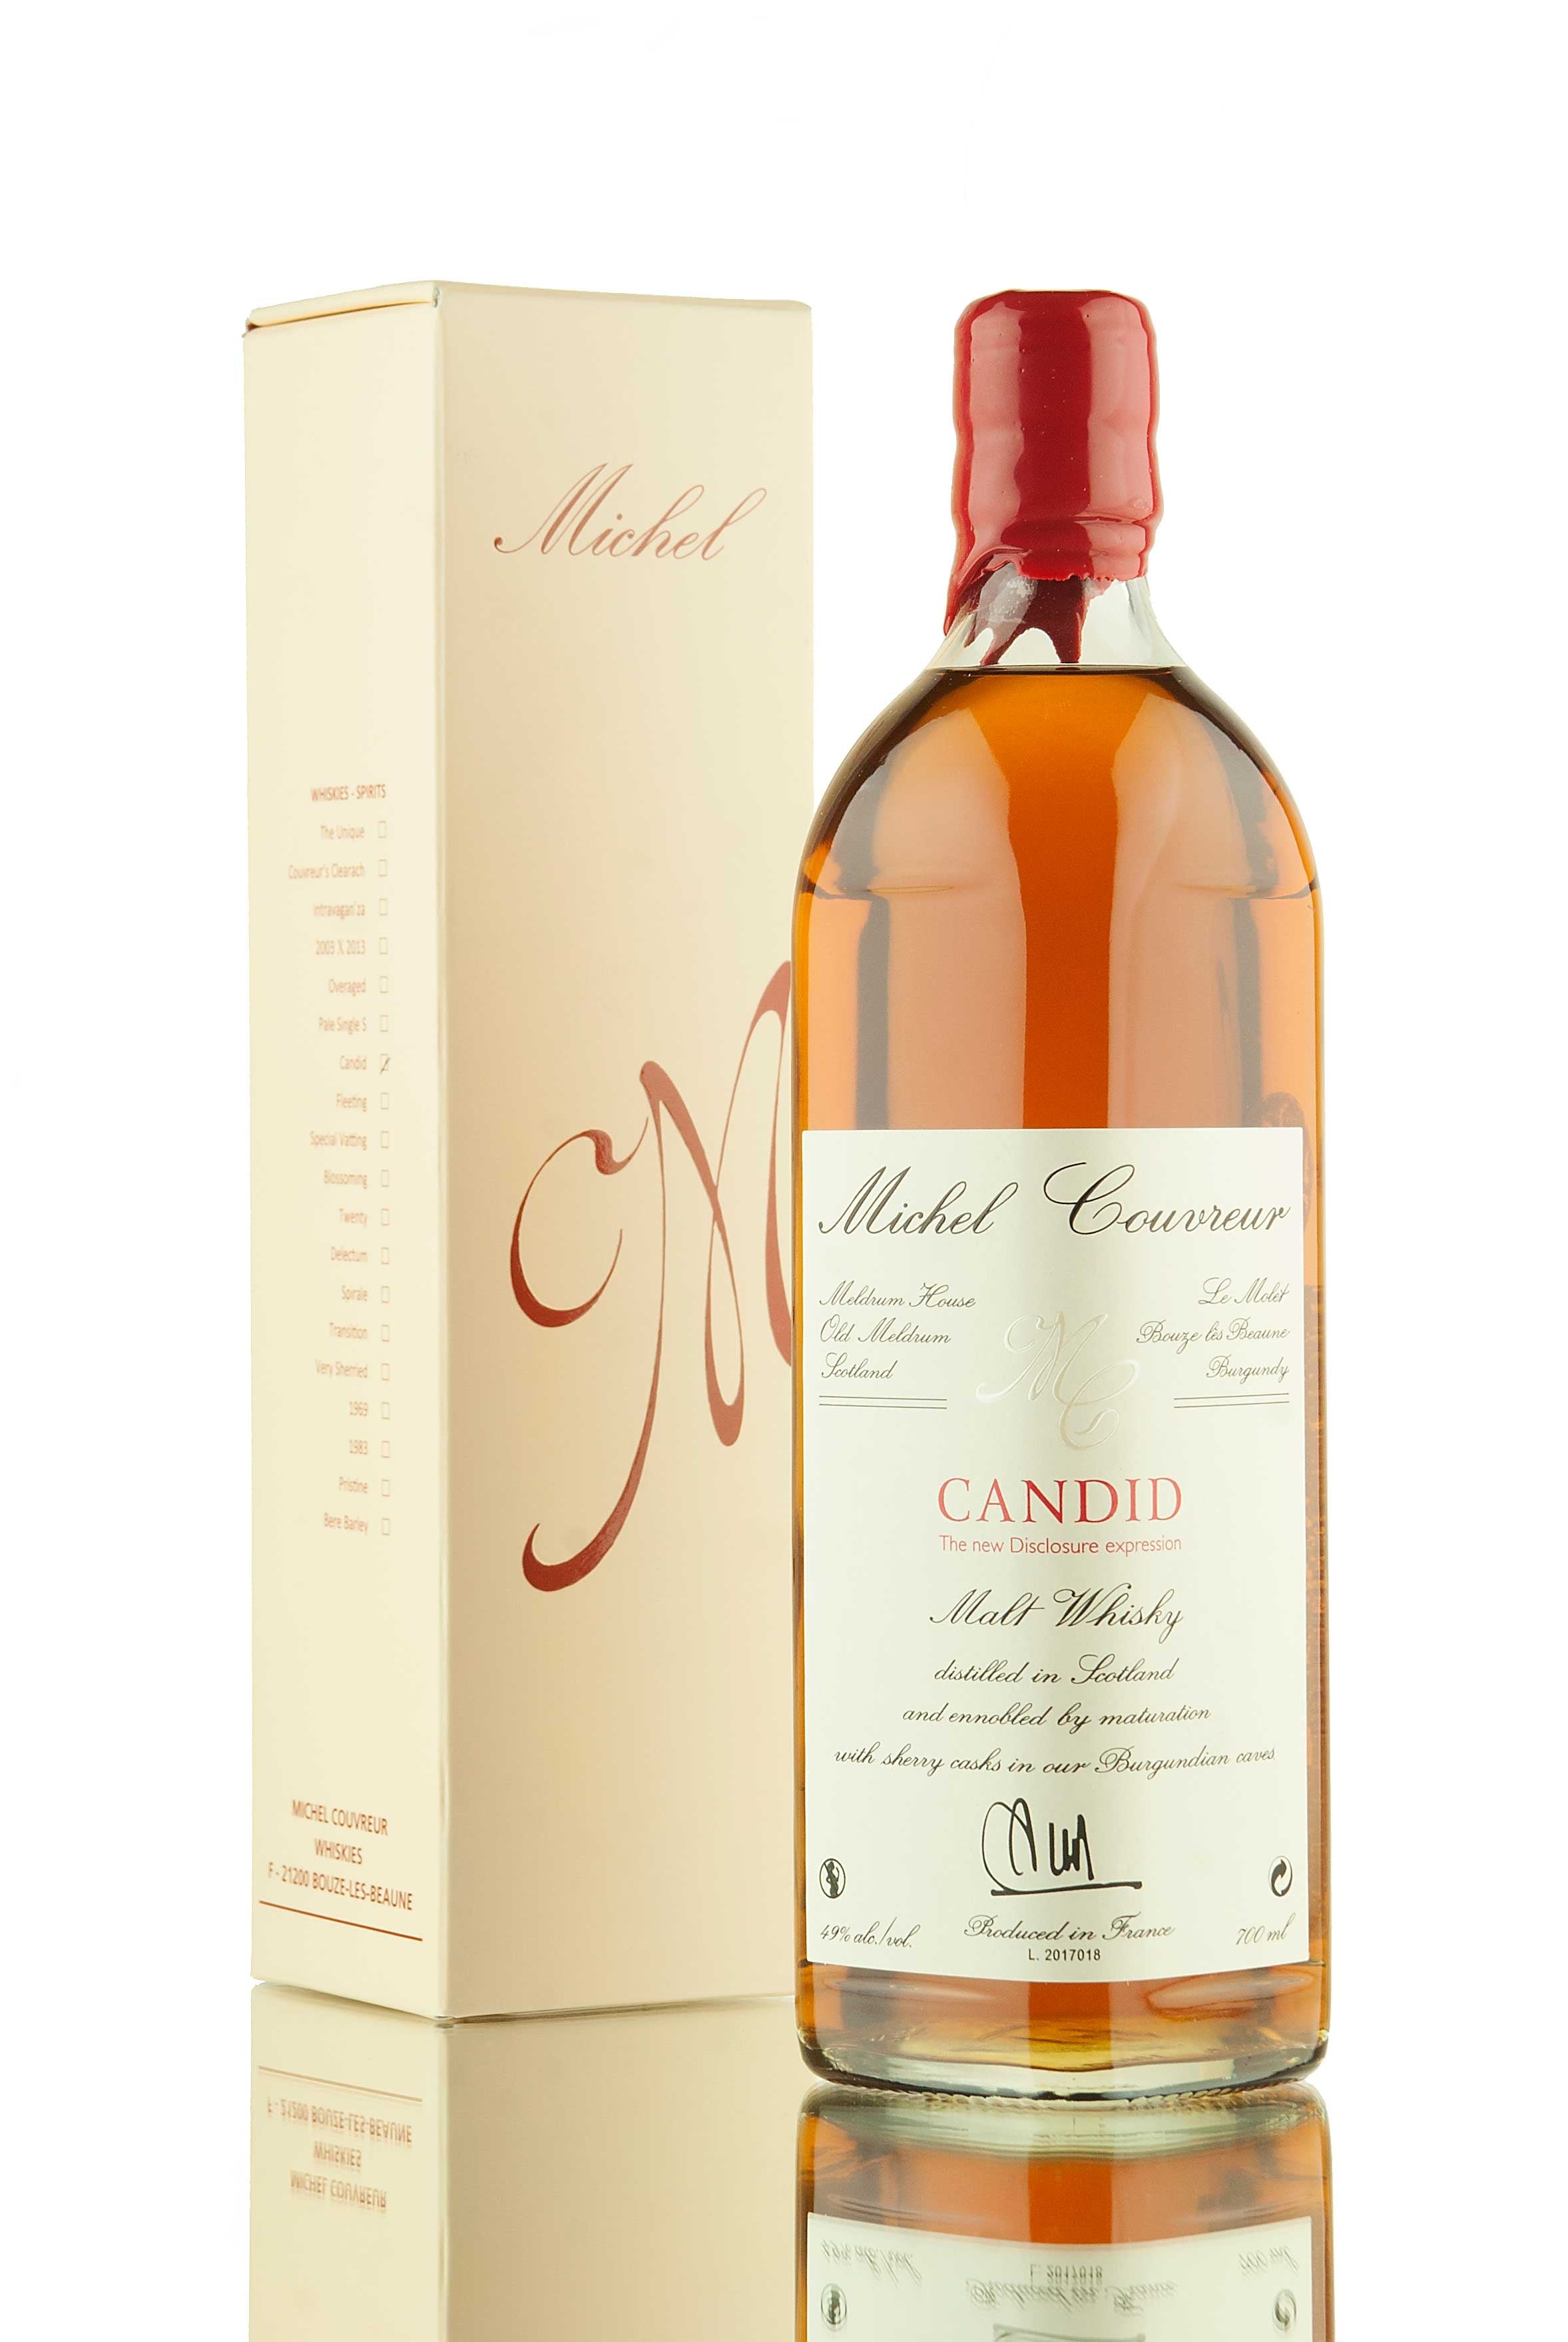 Michel Couvreur Candid Malt Whisky